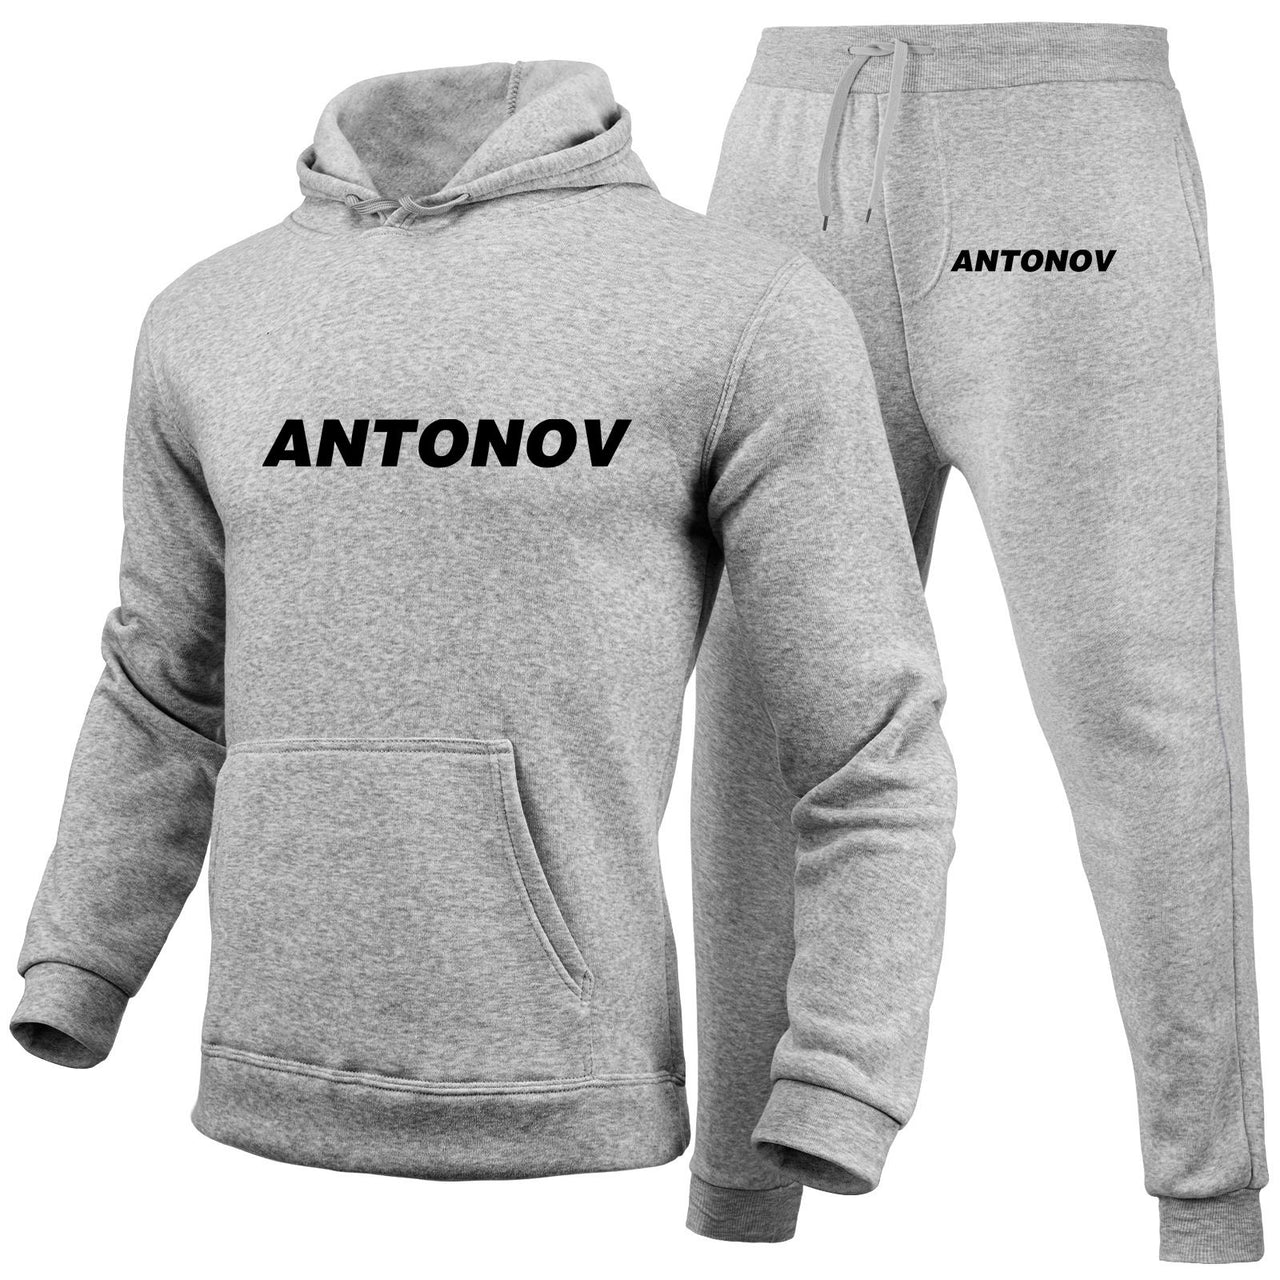 Antonov & Text Designed Hoodies & Sweatpants Set